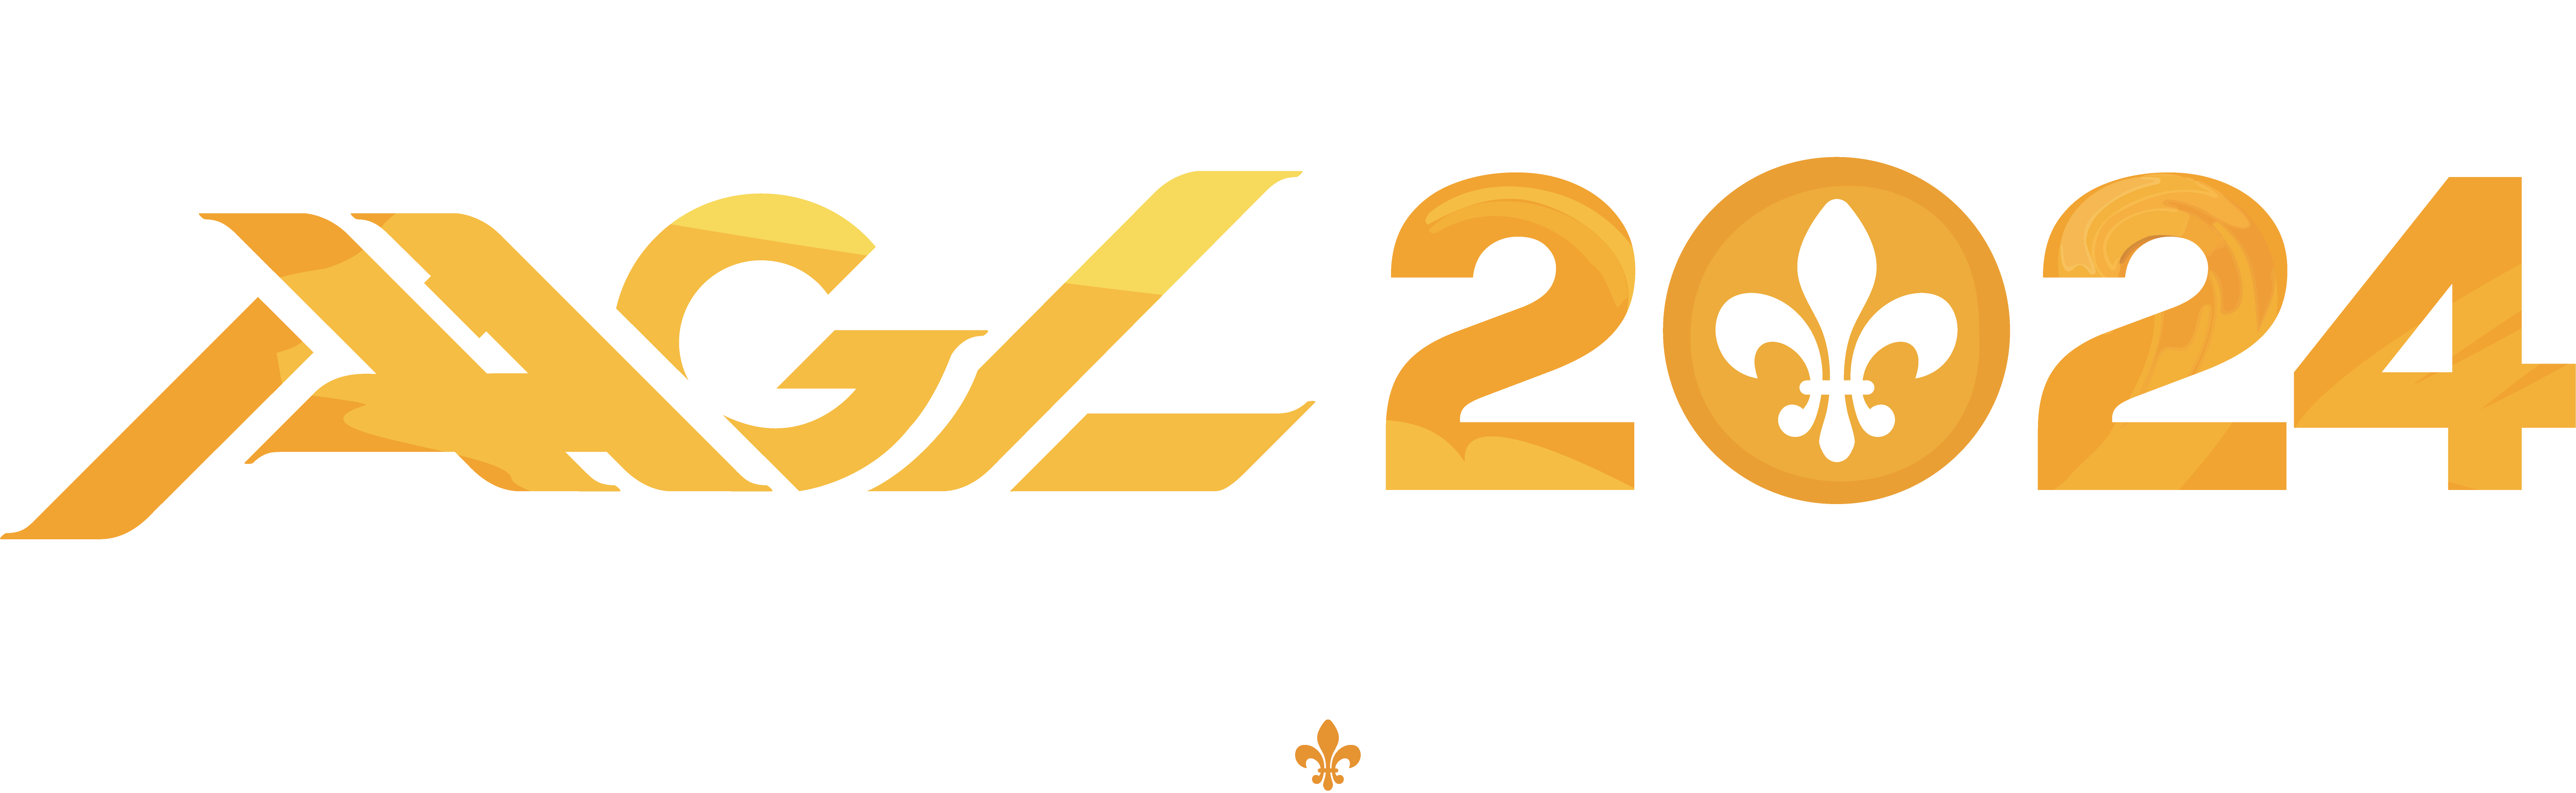 AAGL 2024 Global Congress New Orleans, LA Nov 1619, 2024 AAGL